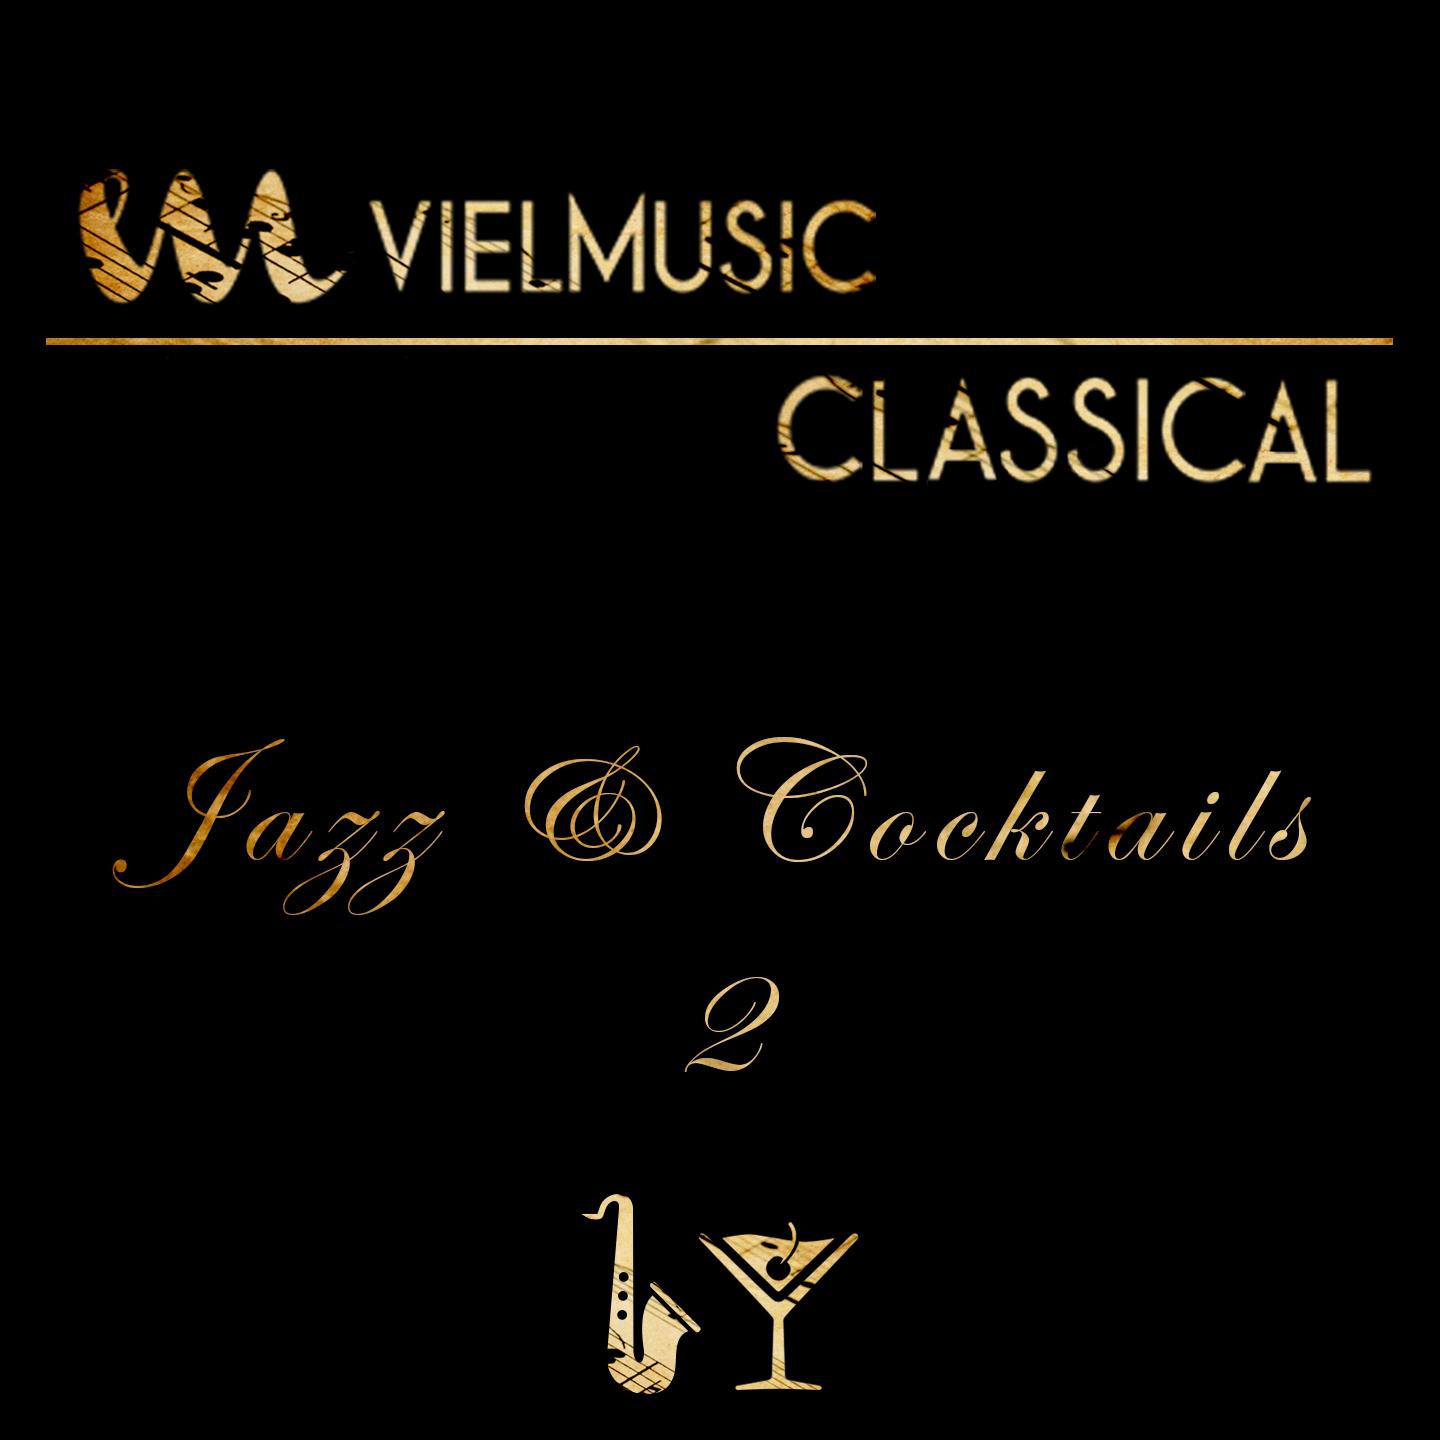 Viel Classical: Jazz & Cocktails, Vol. 2